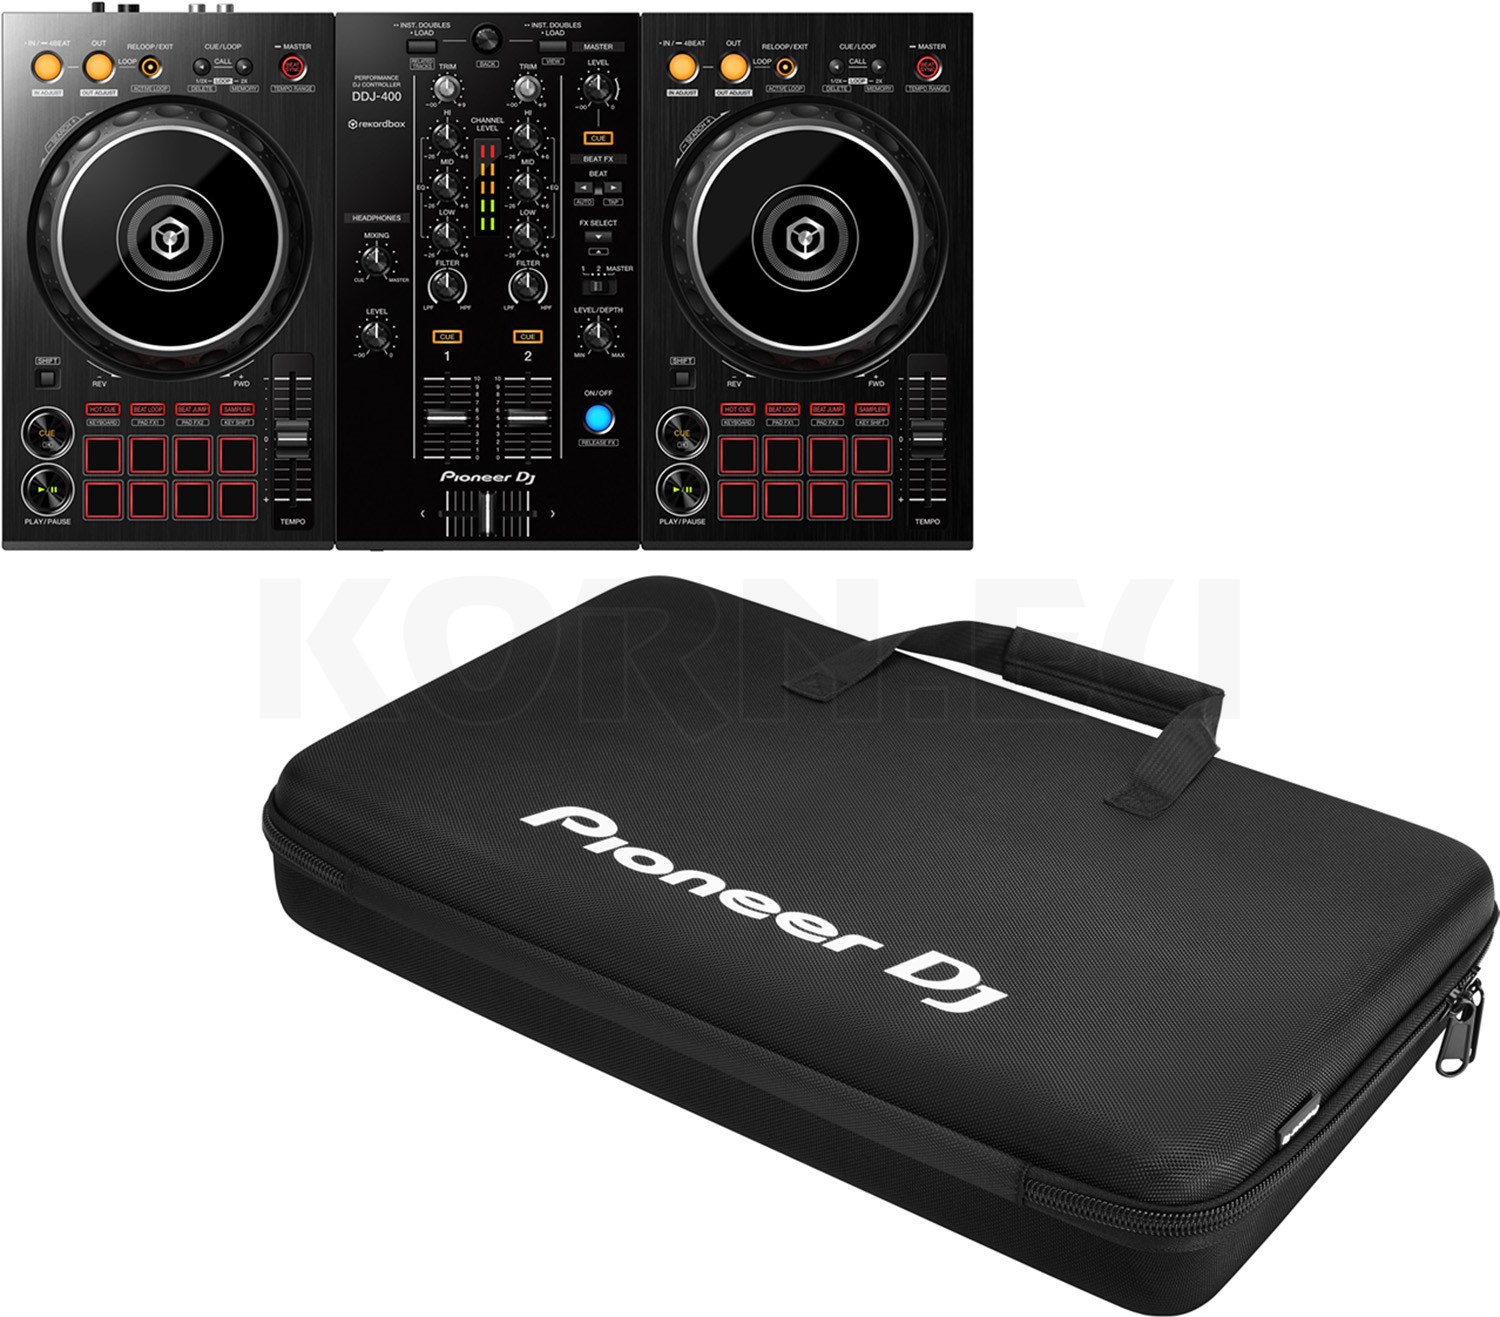 Dj контроллер pioneer 400 купить. DJ Pioneer DDJ-400. Pioneer 400 контроллер. Pioneer DDJ flx4. Пульт DJ Pioneer 400.